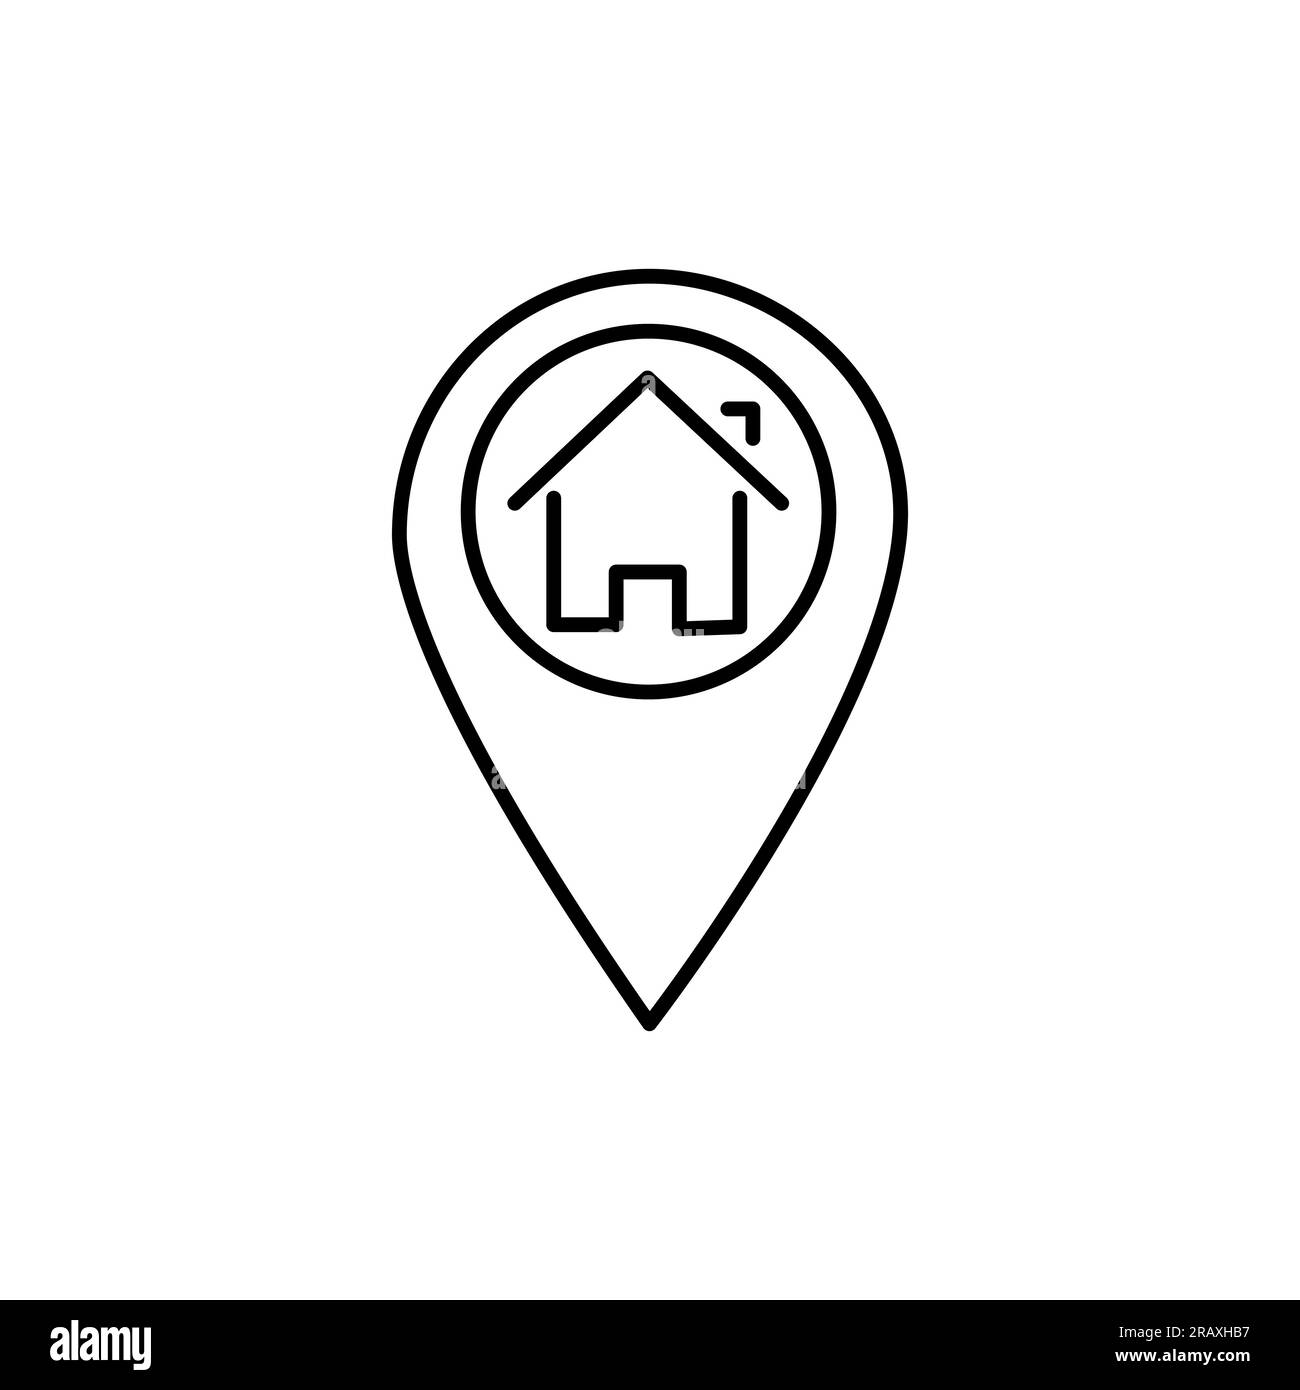 Outline location home icon illustration vector symbol Stock Vector